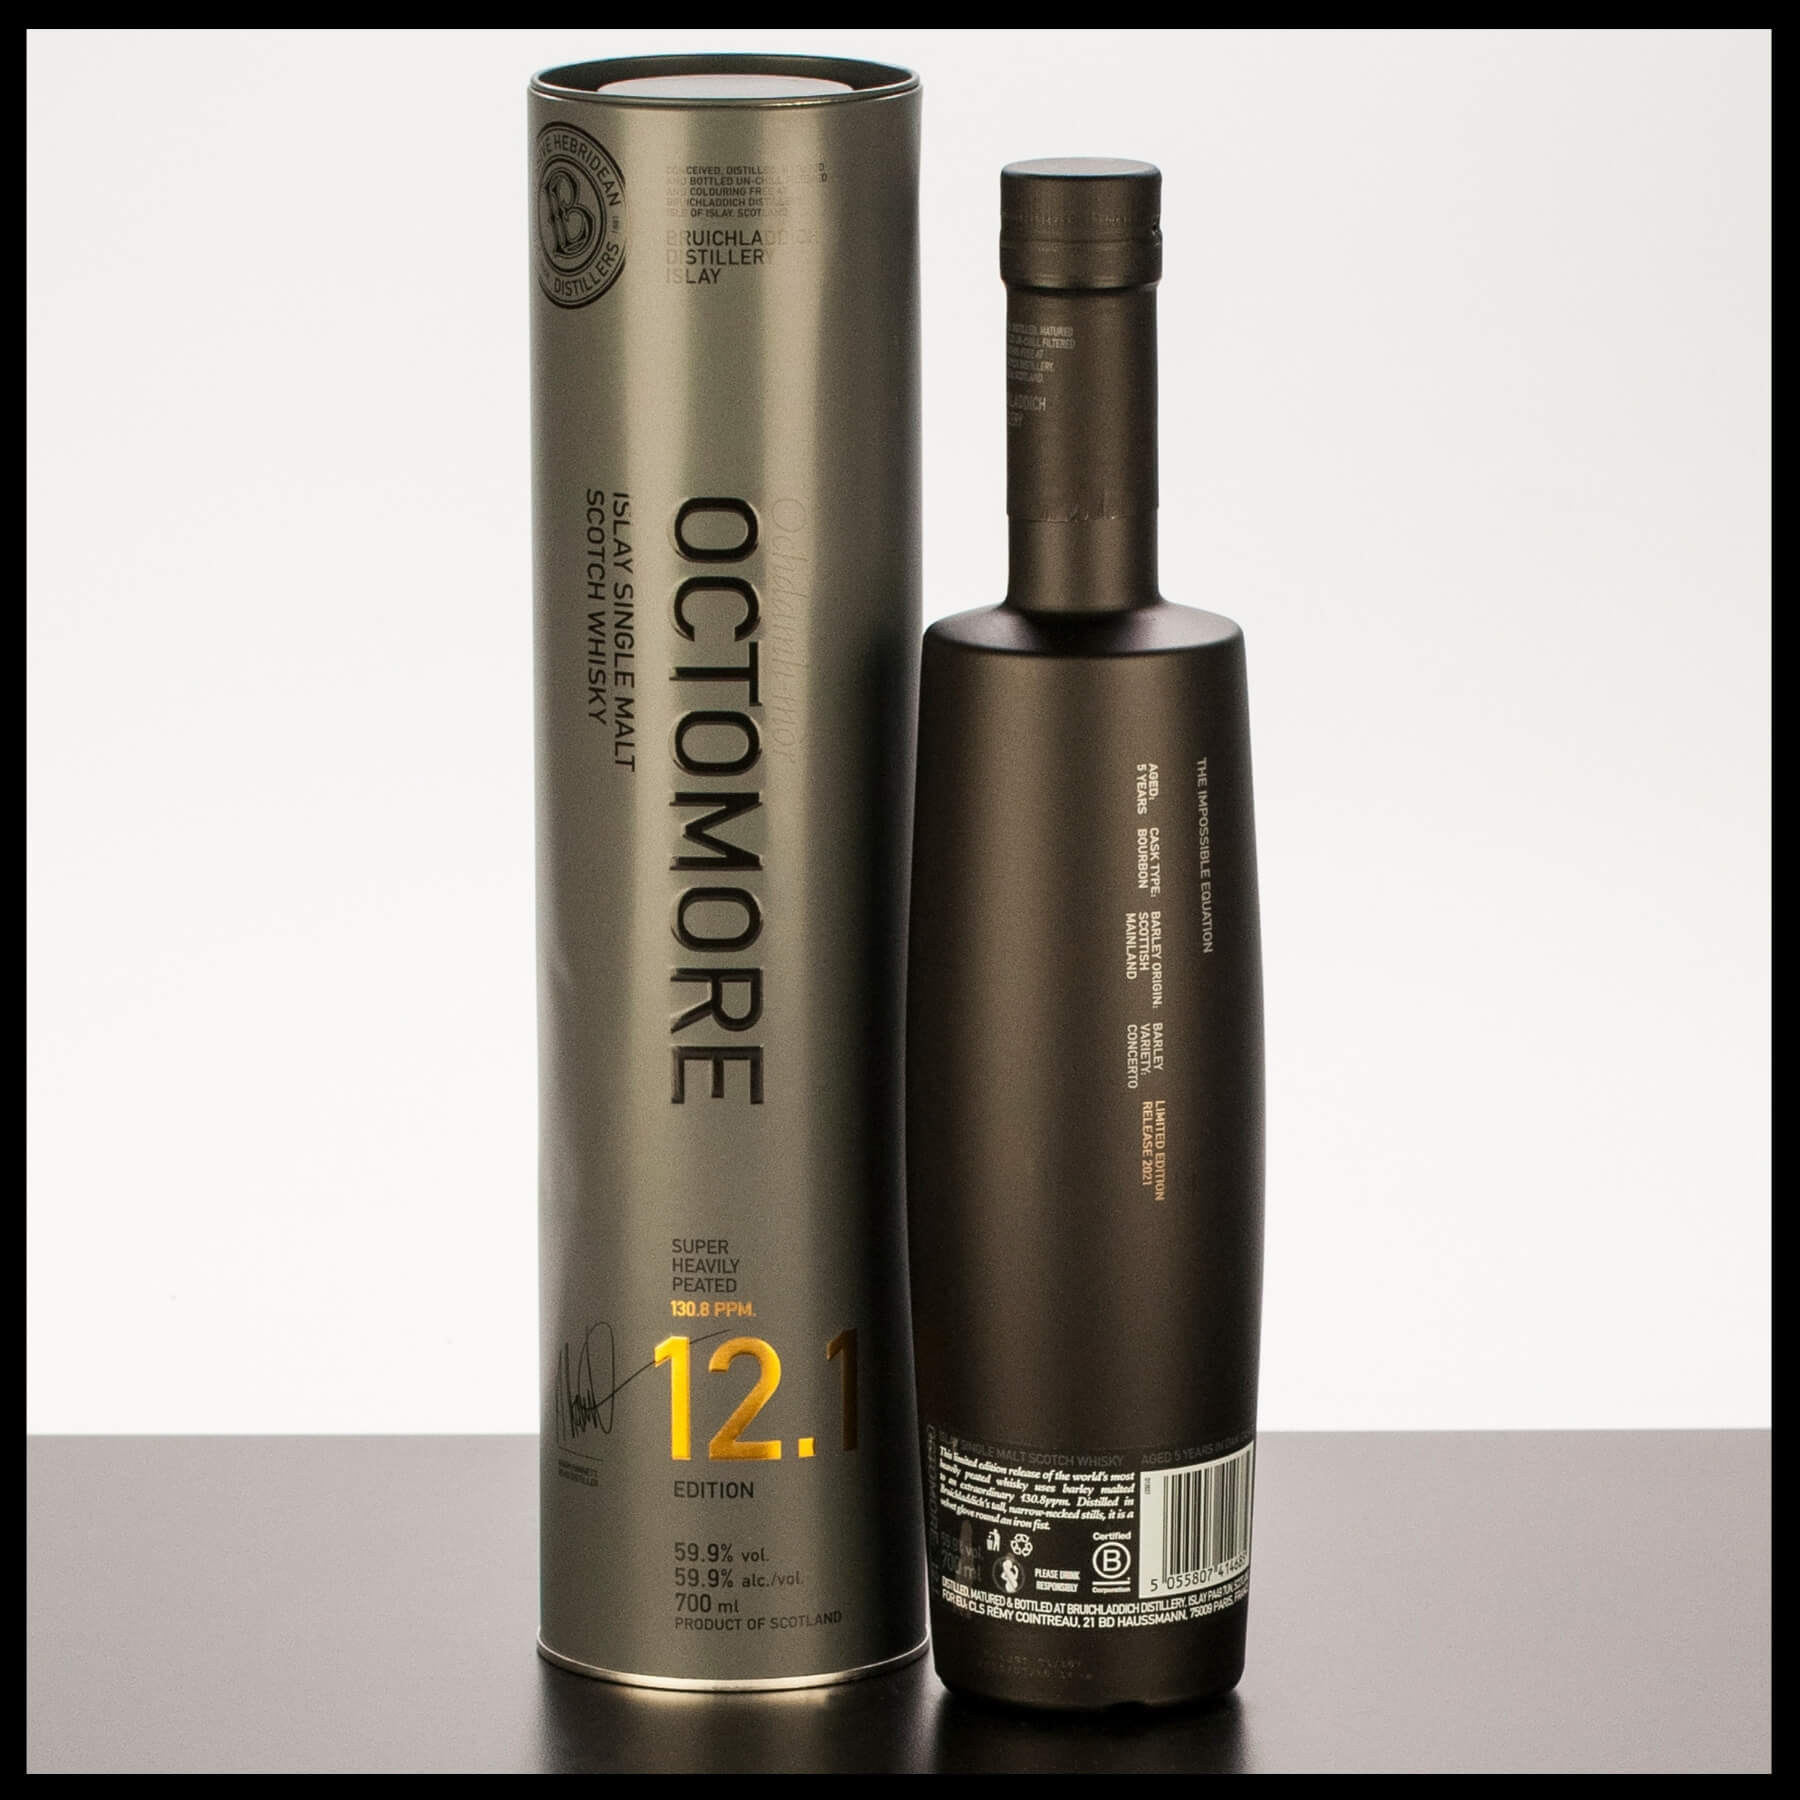 Octomore 12.1 Islay Single Malt Whisky 0,7L - 59,9% Vol. - Trinklusiv